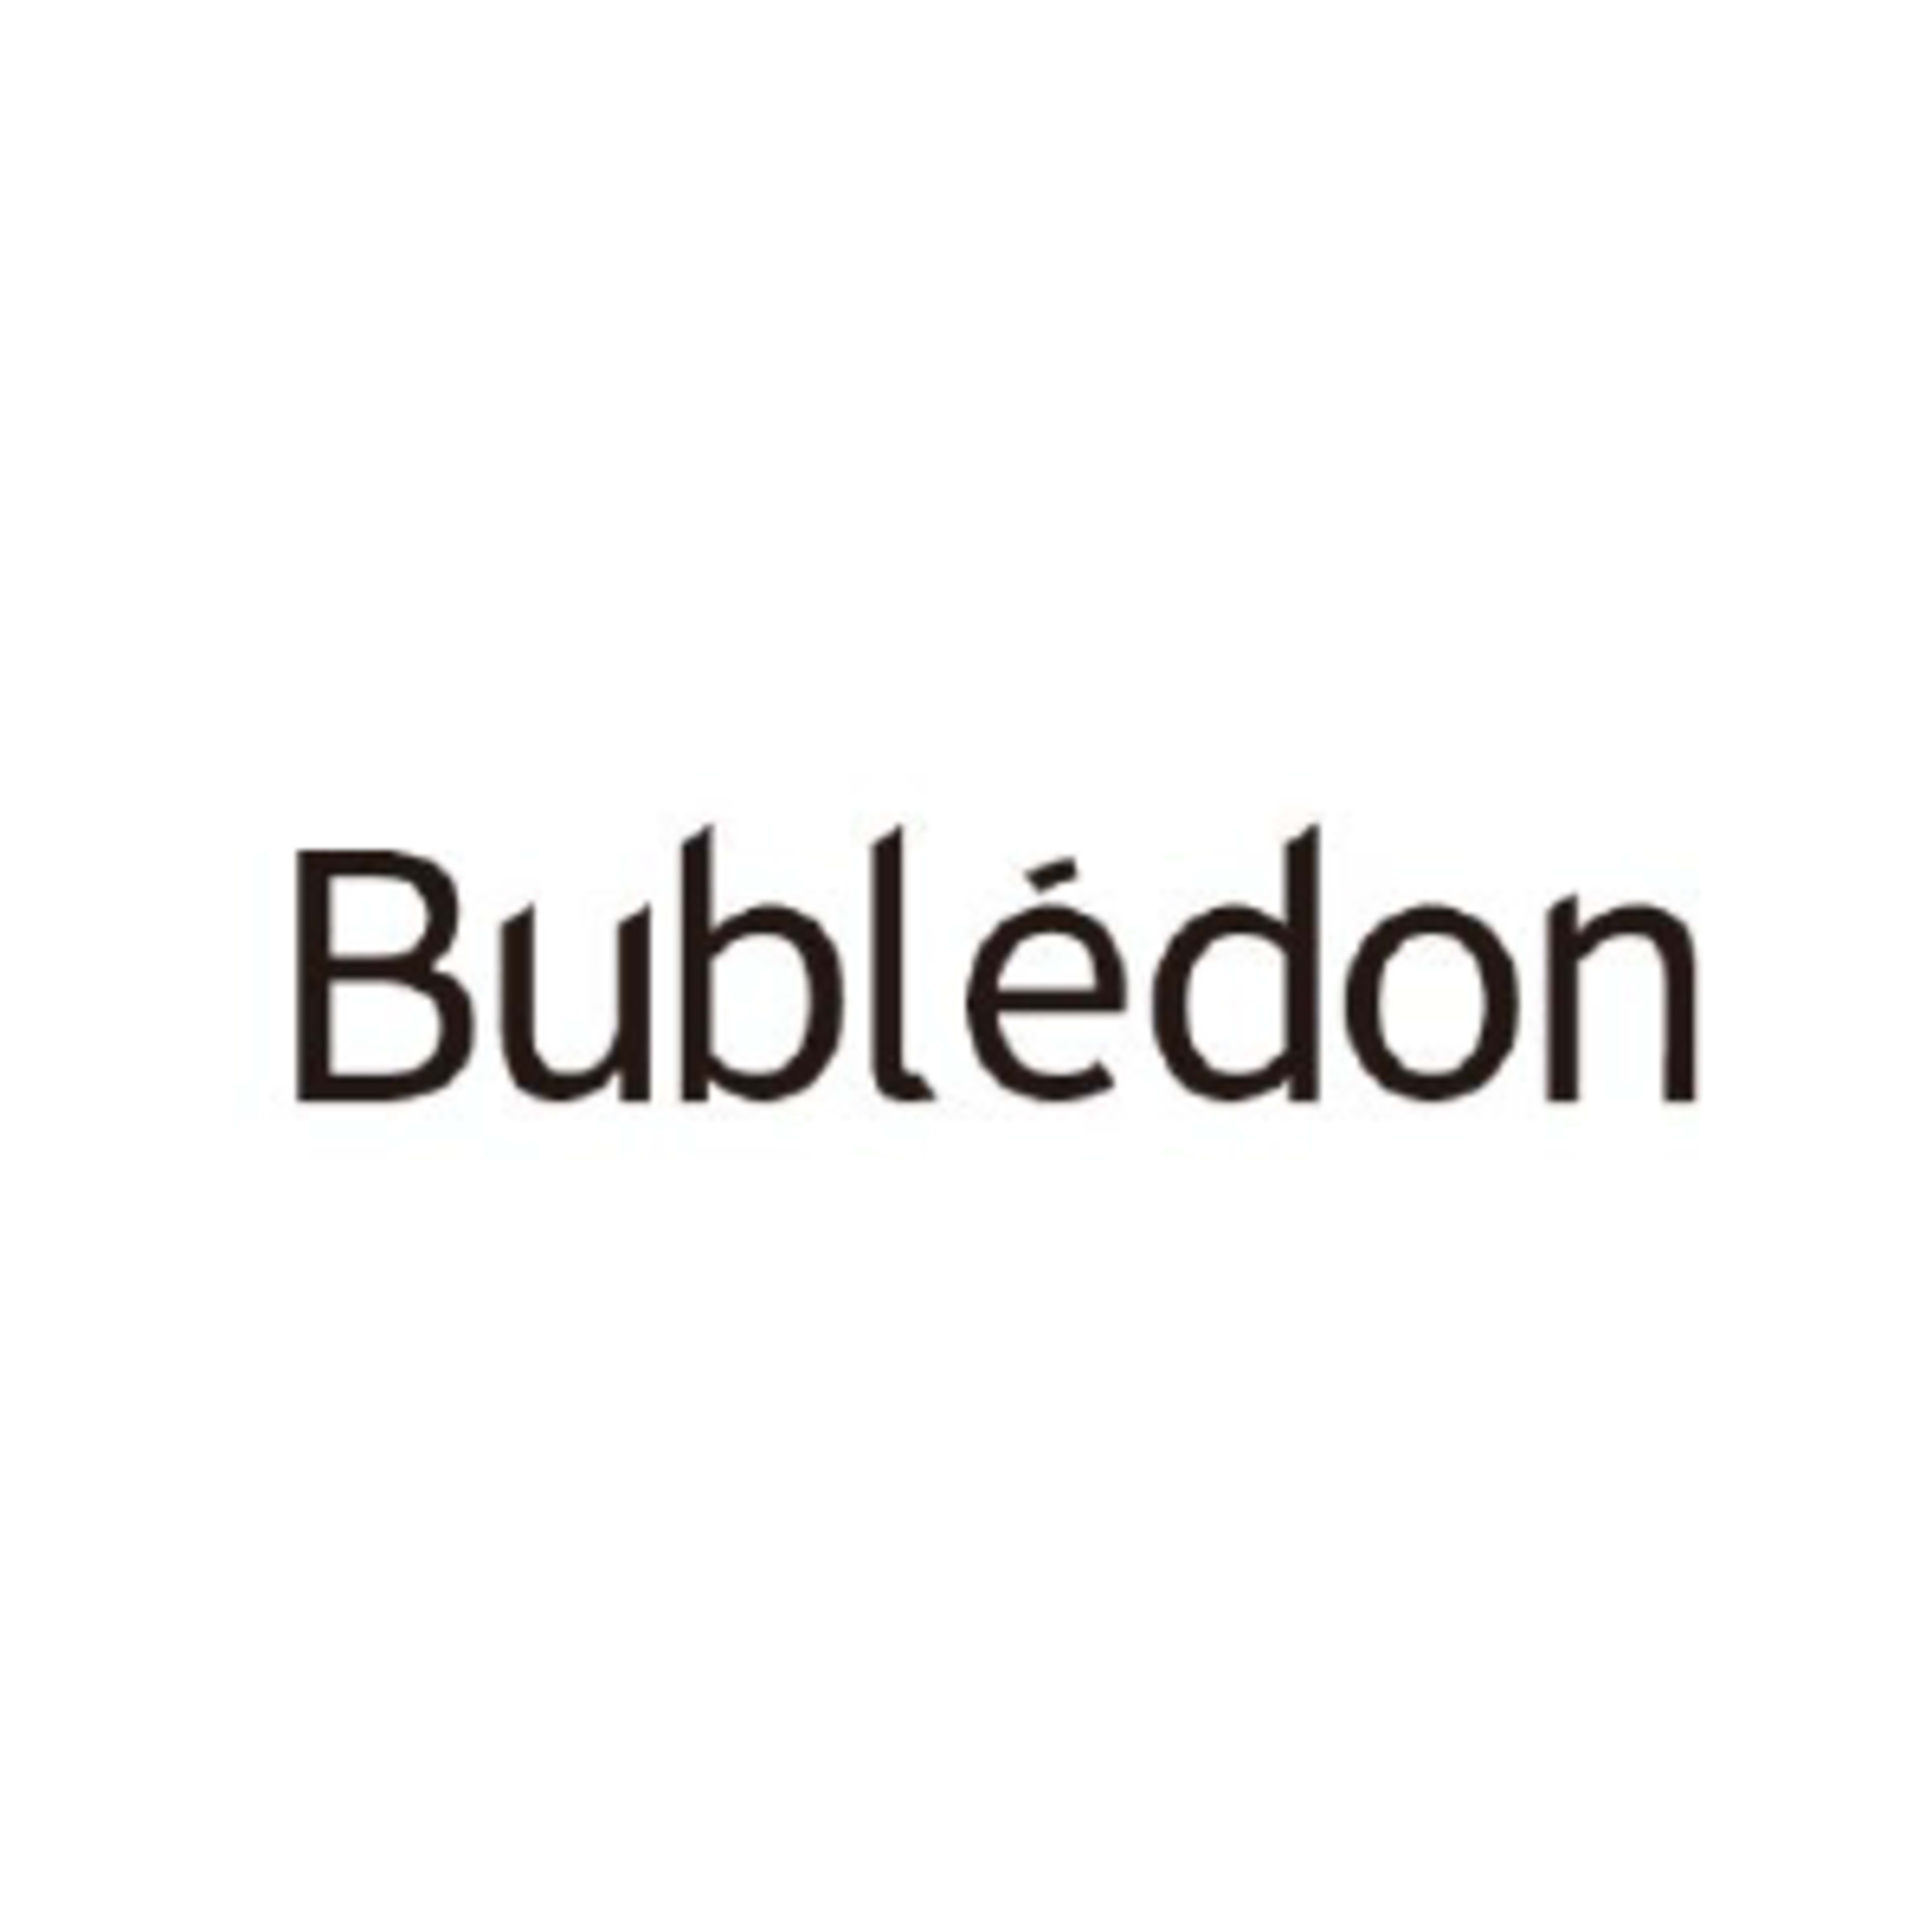 Bublédon Code